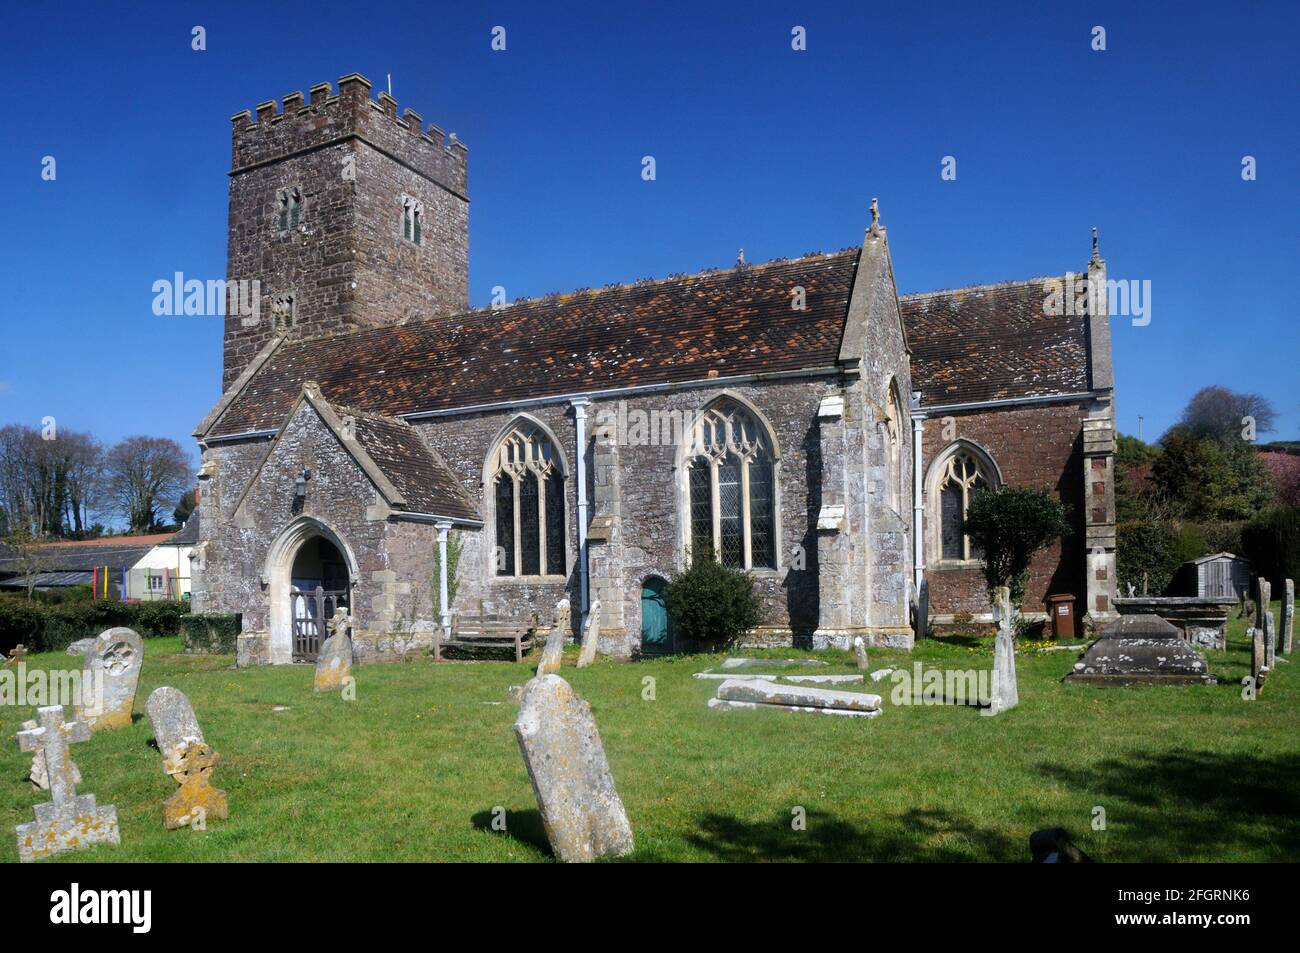 The Church of St. Peter, in Uplowman, Devon, England Stock Photo